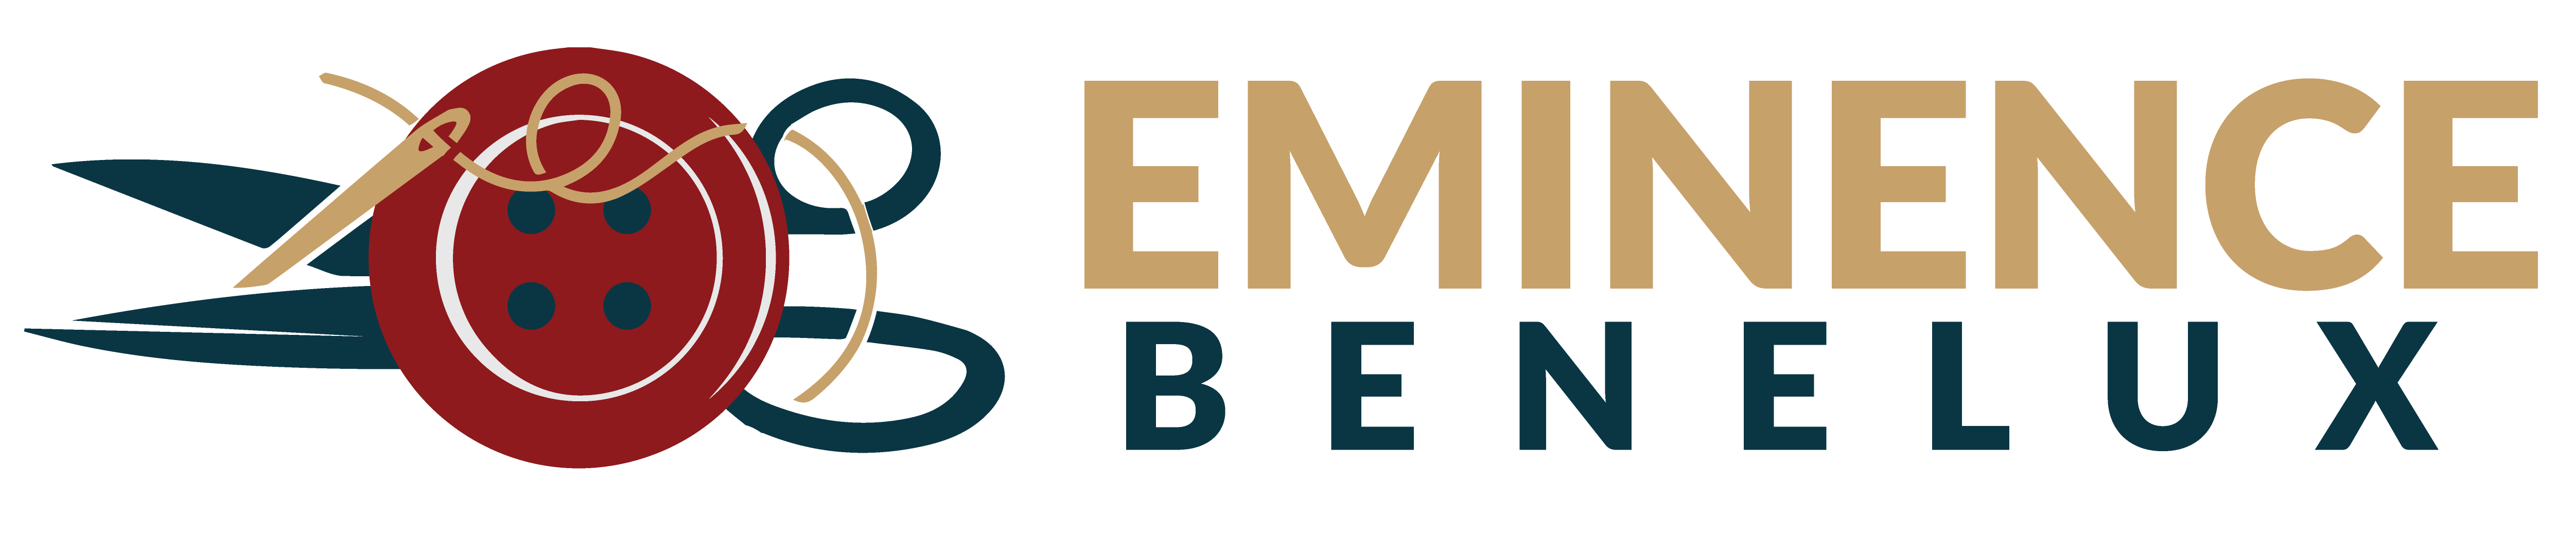 Eminence Benelux